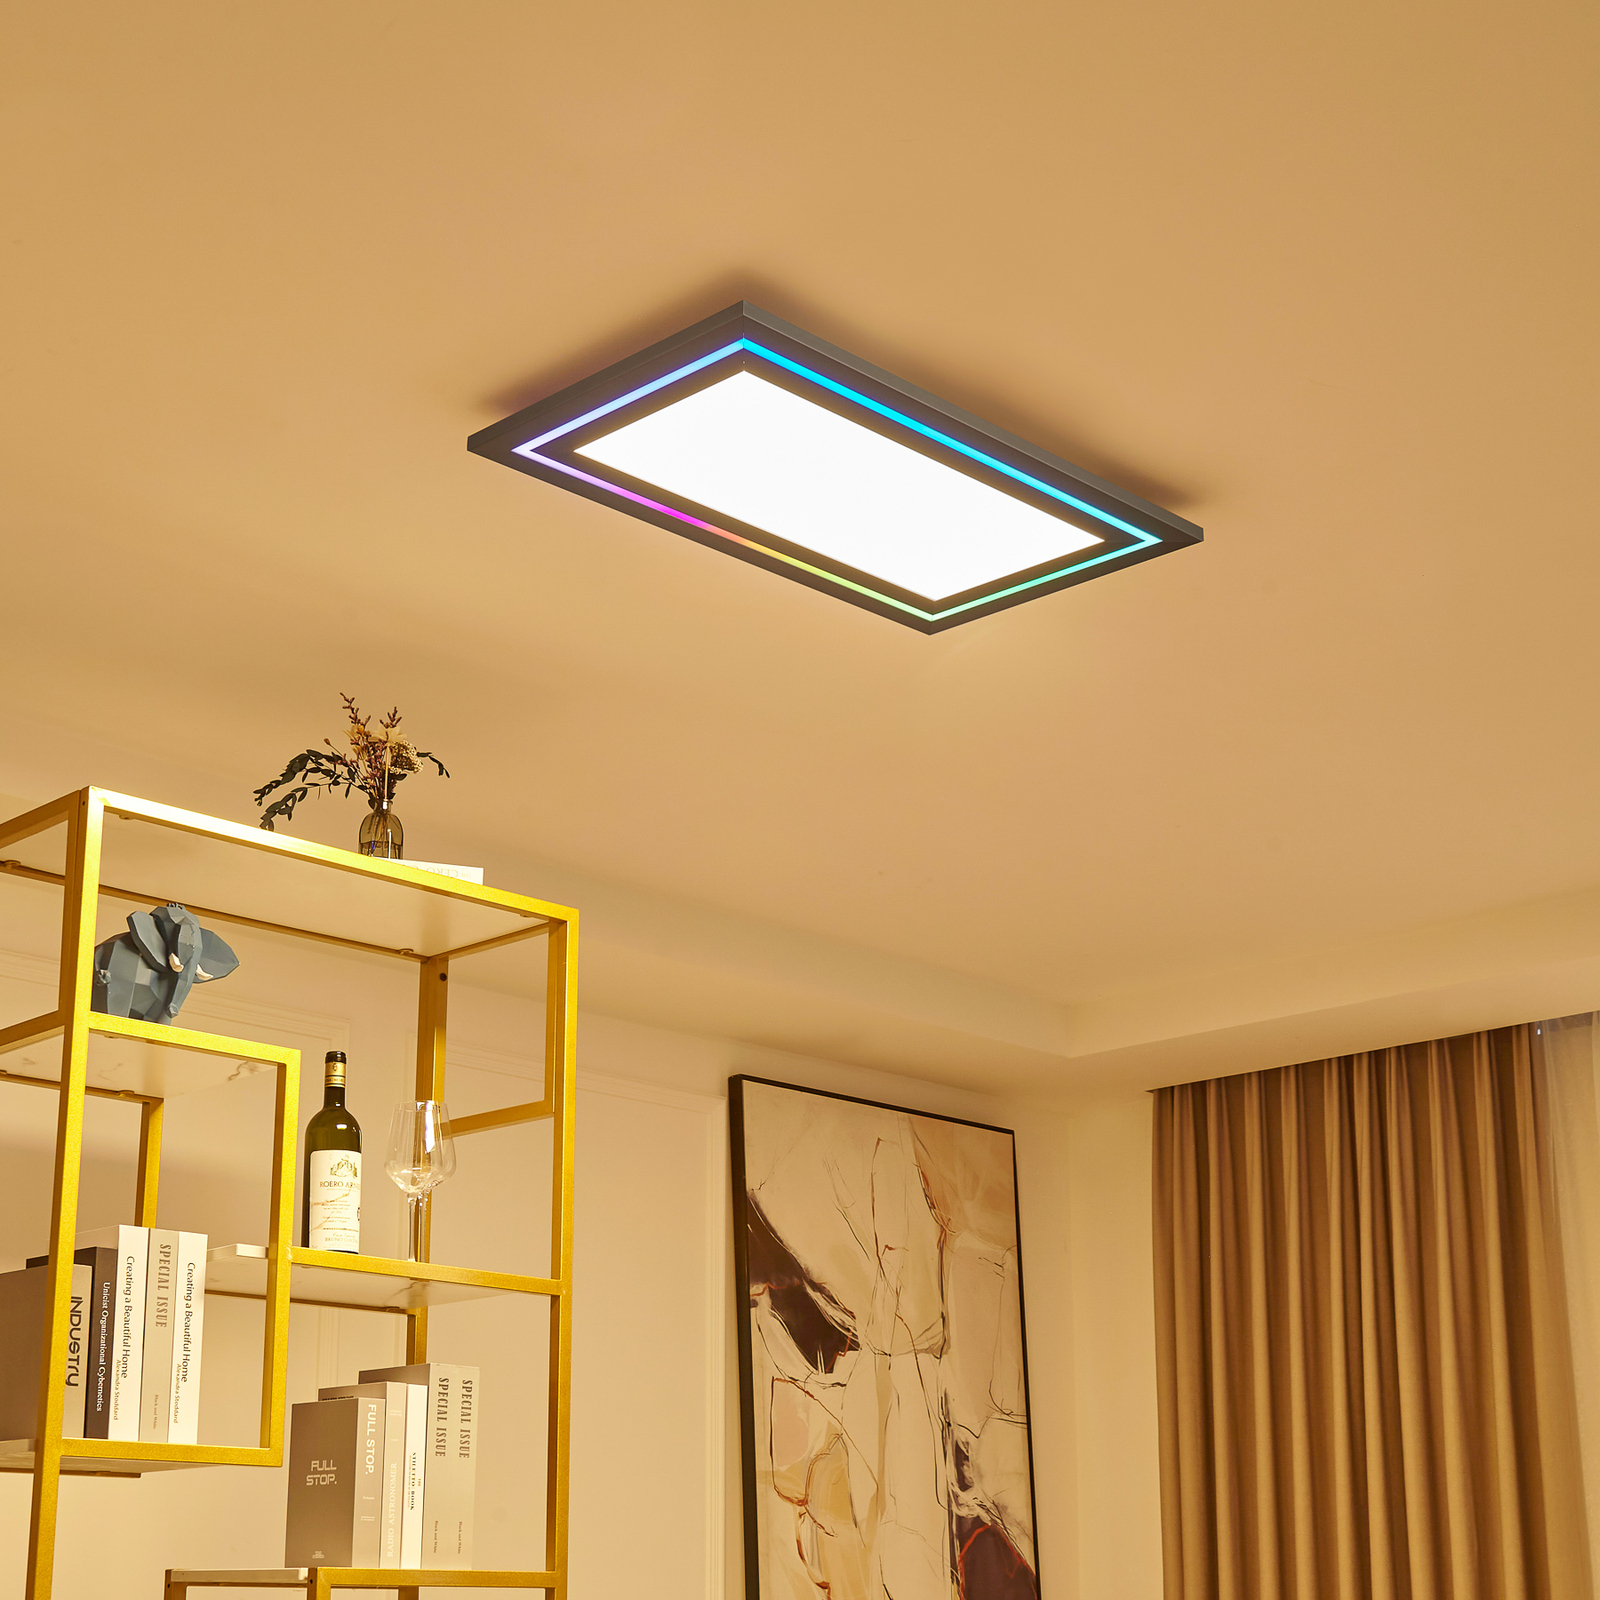 Lucande LED plafondlamp Leicy, nikkel, 80 cm, RGBIC, CCT